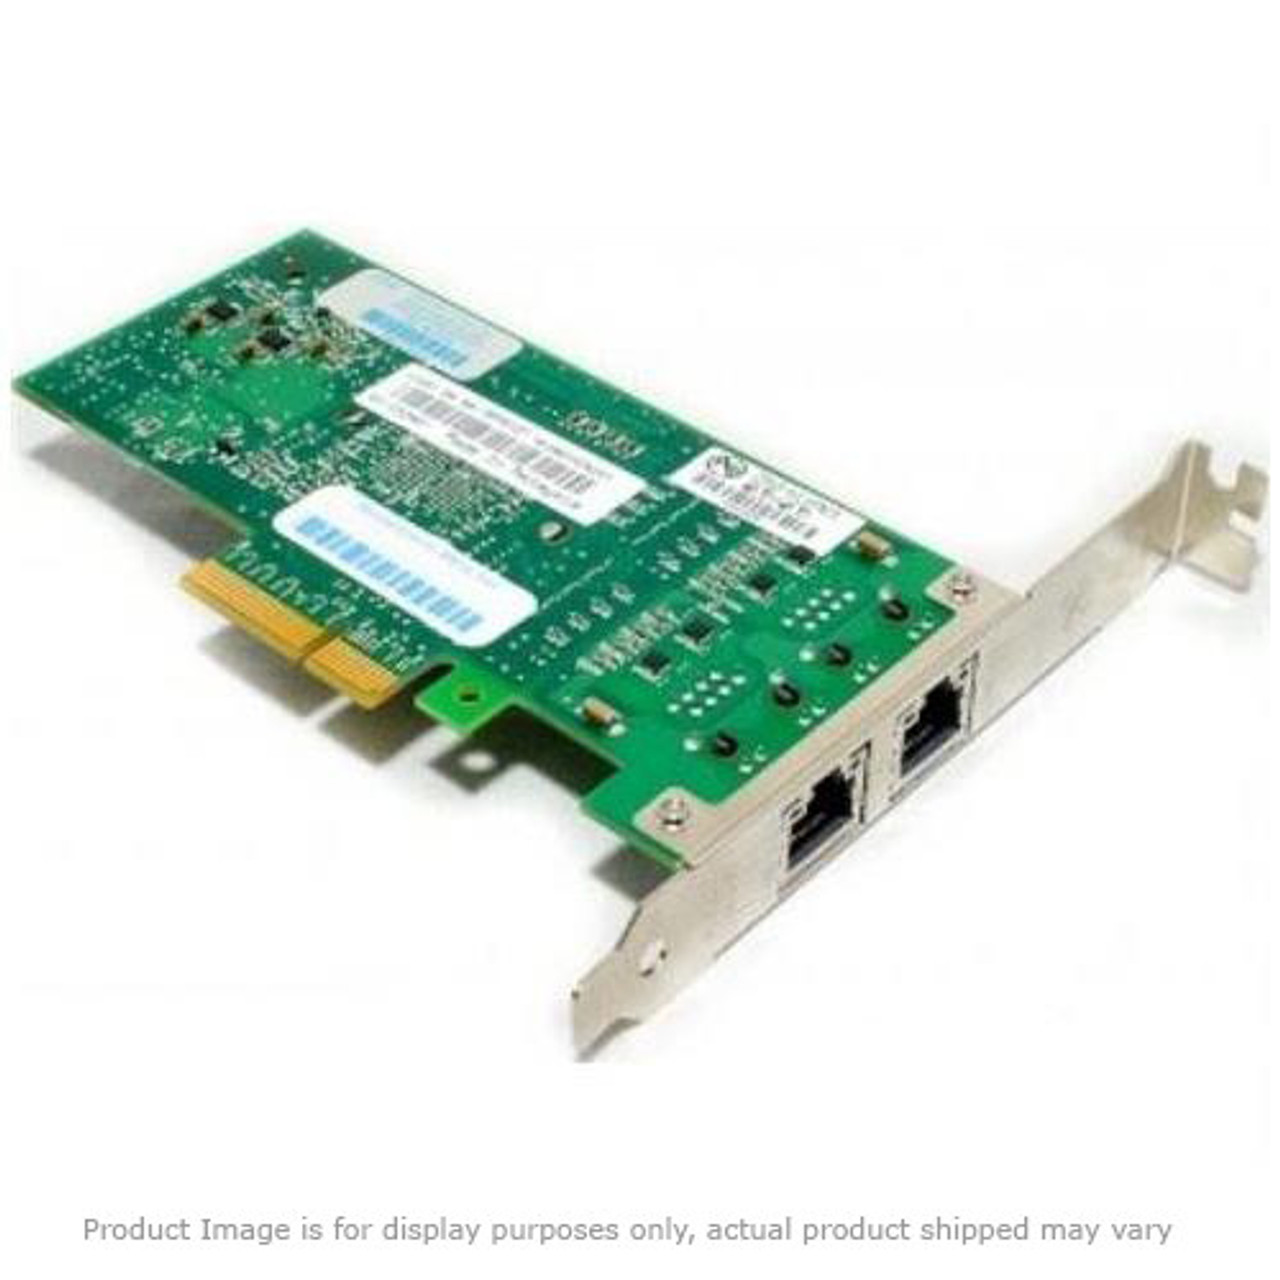 845-01724-02 ATI PCI 10MB/SEC PCI 10MB Fibre to 10/100 Ethernet Nics Adapter Card